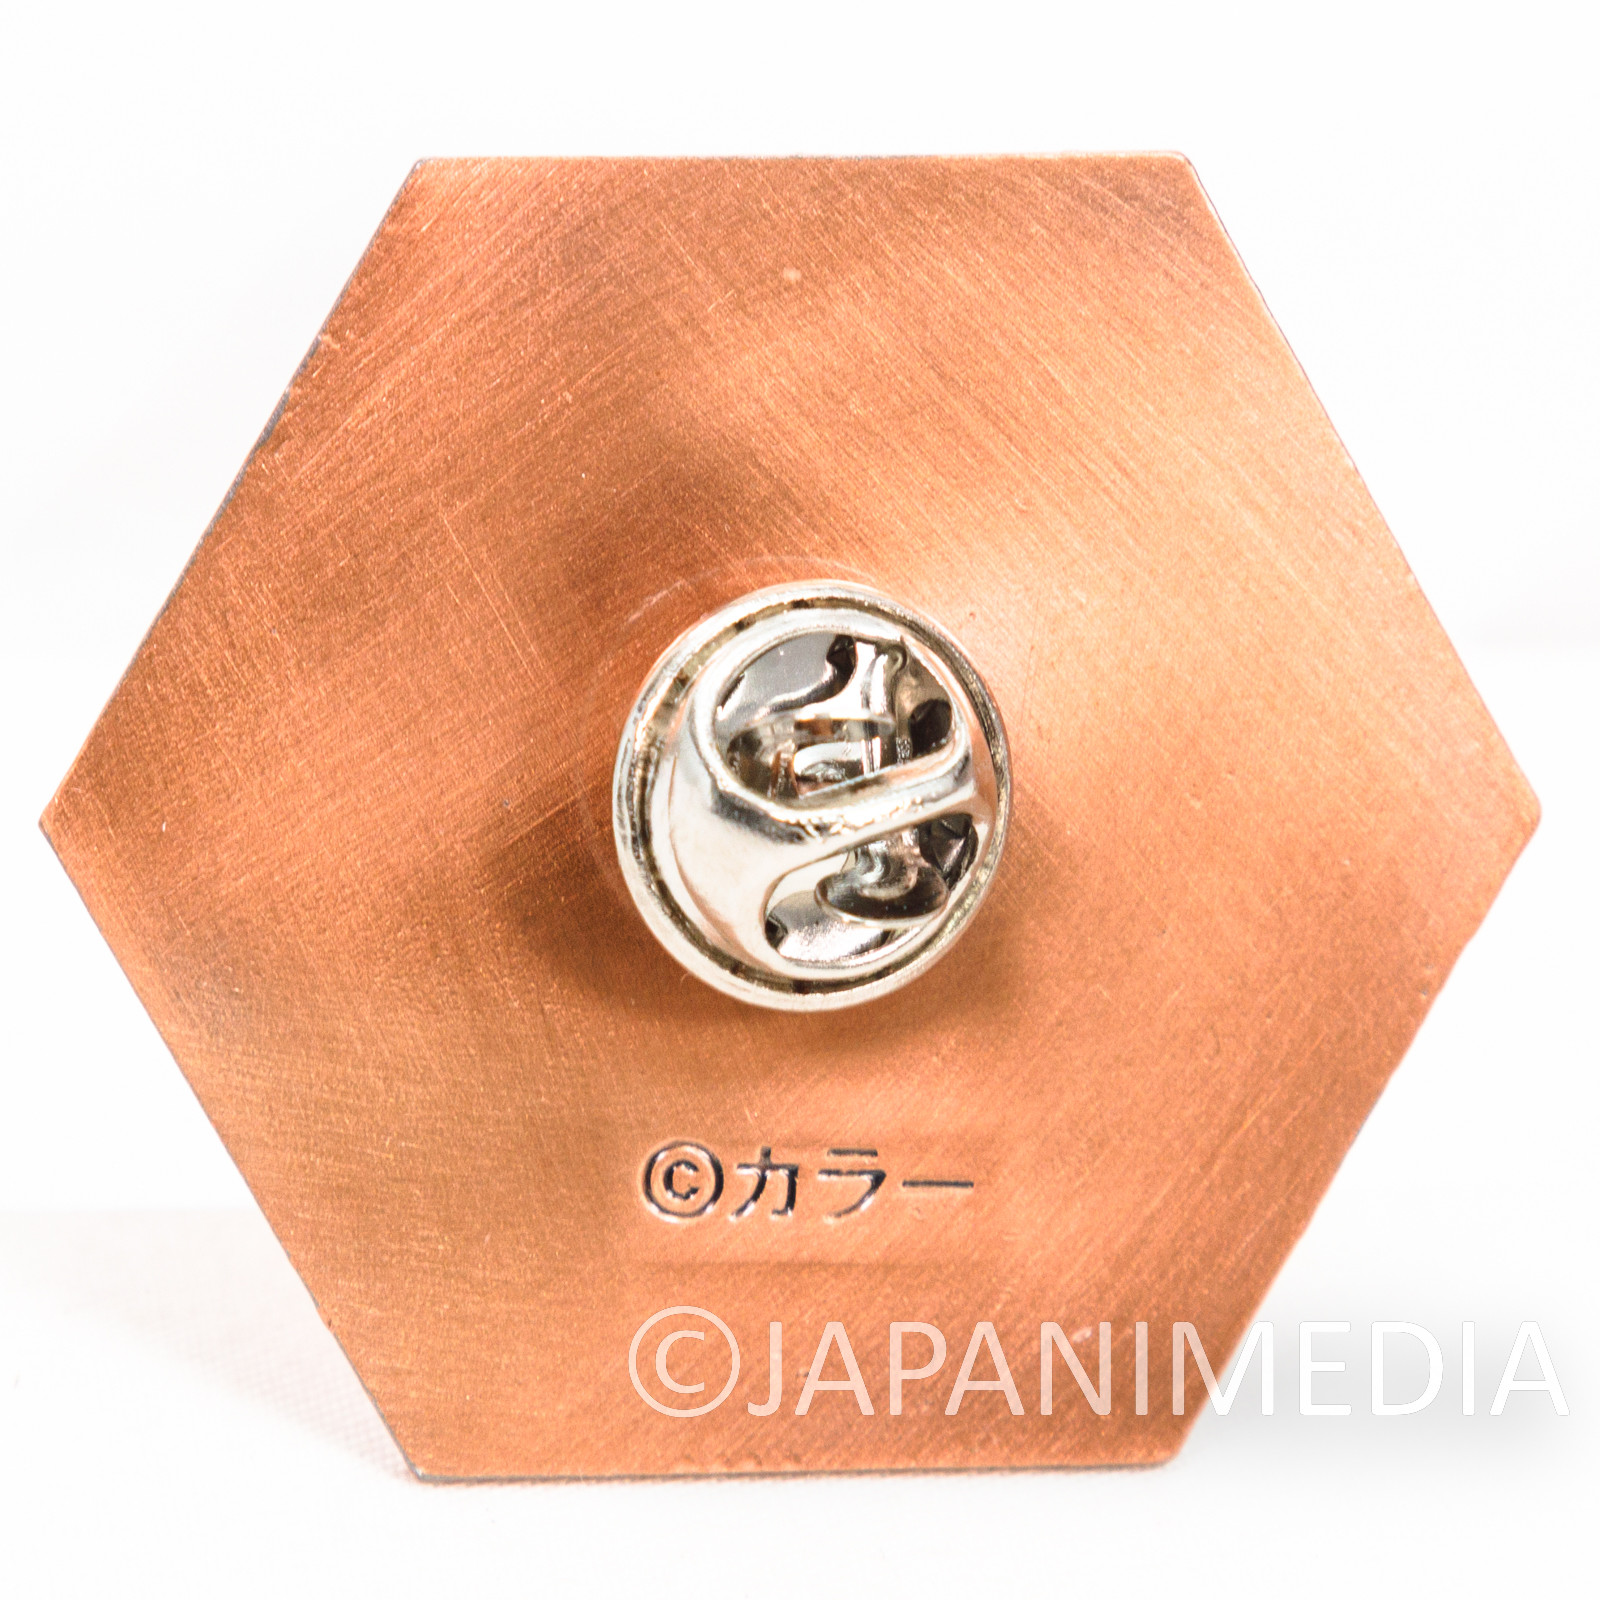 Evangelion Shinji Ikari Metal Pins JAPAN ANIME